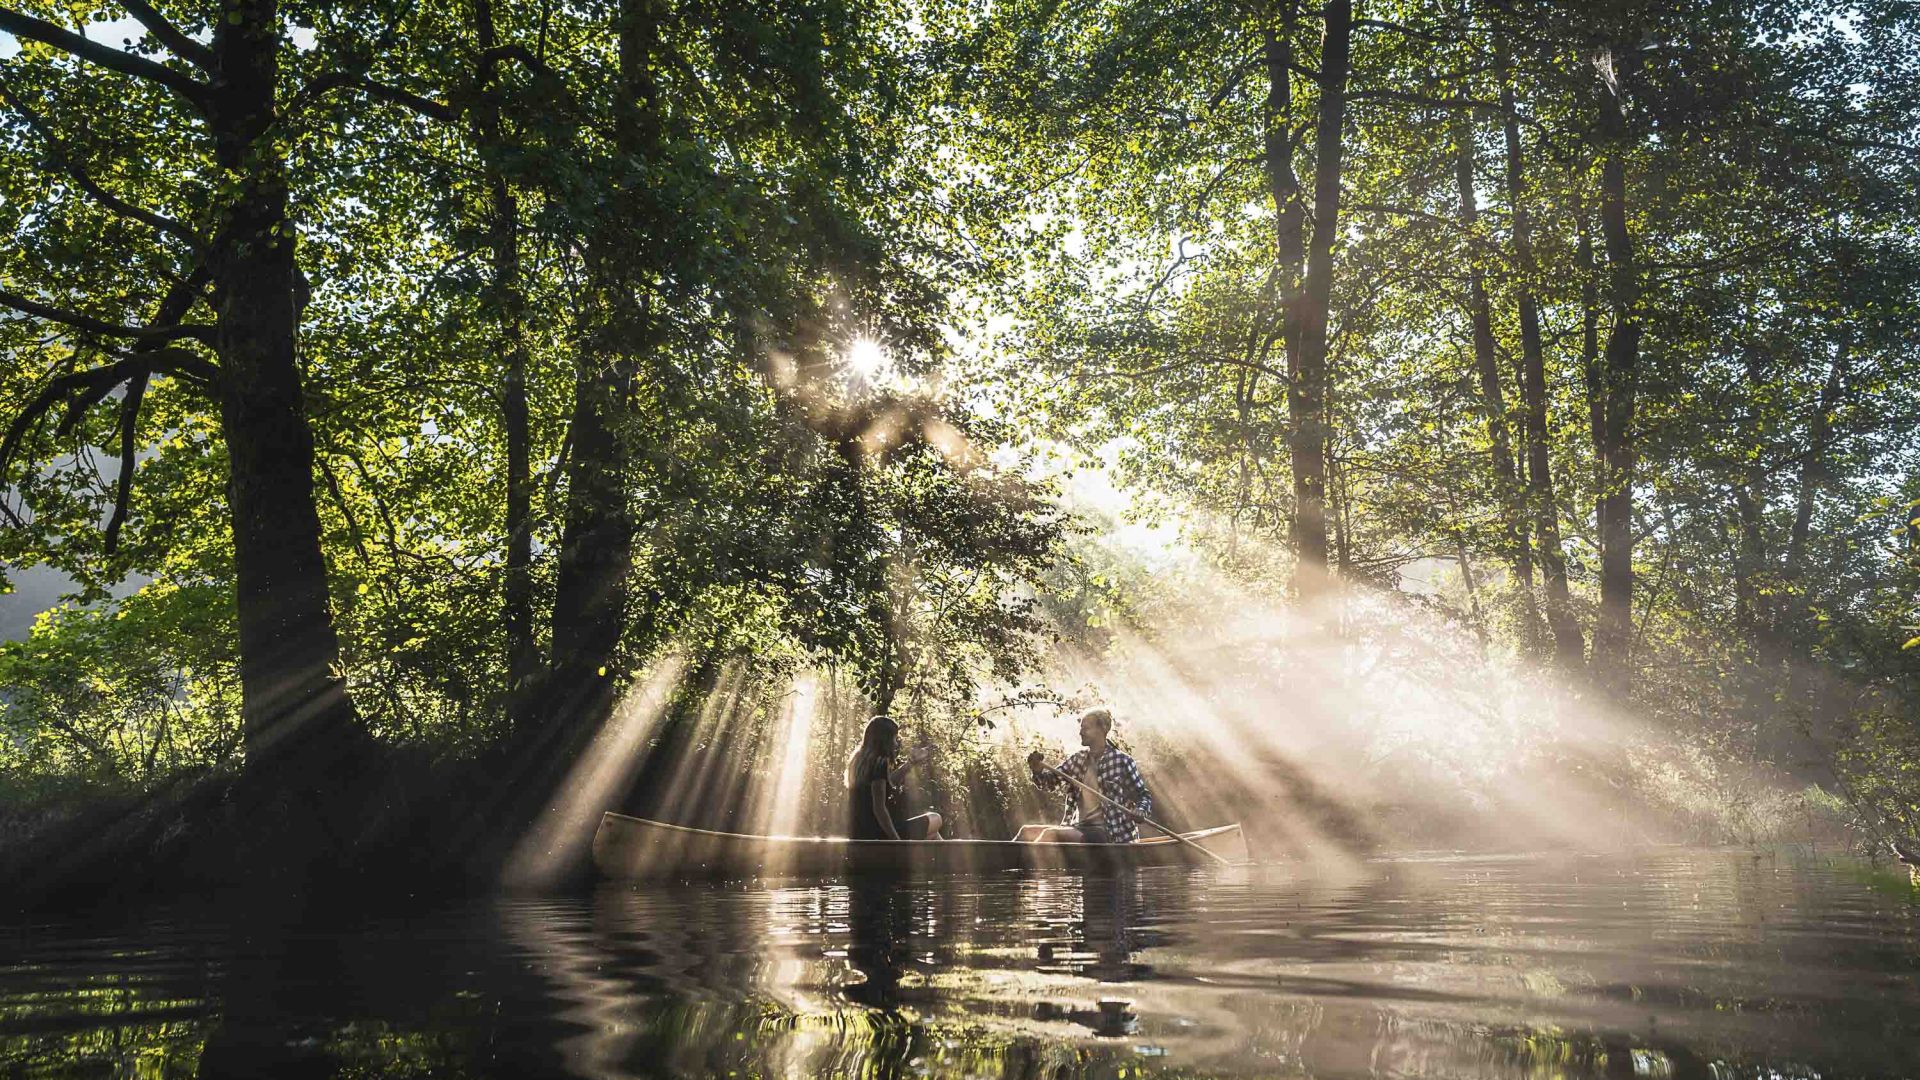 People kayak past trees as sunlight streams down on them.